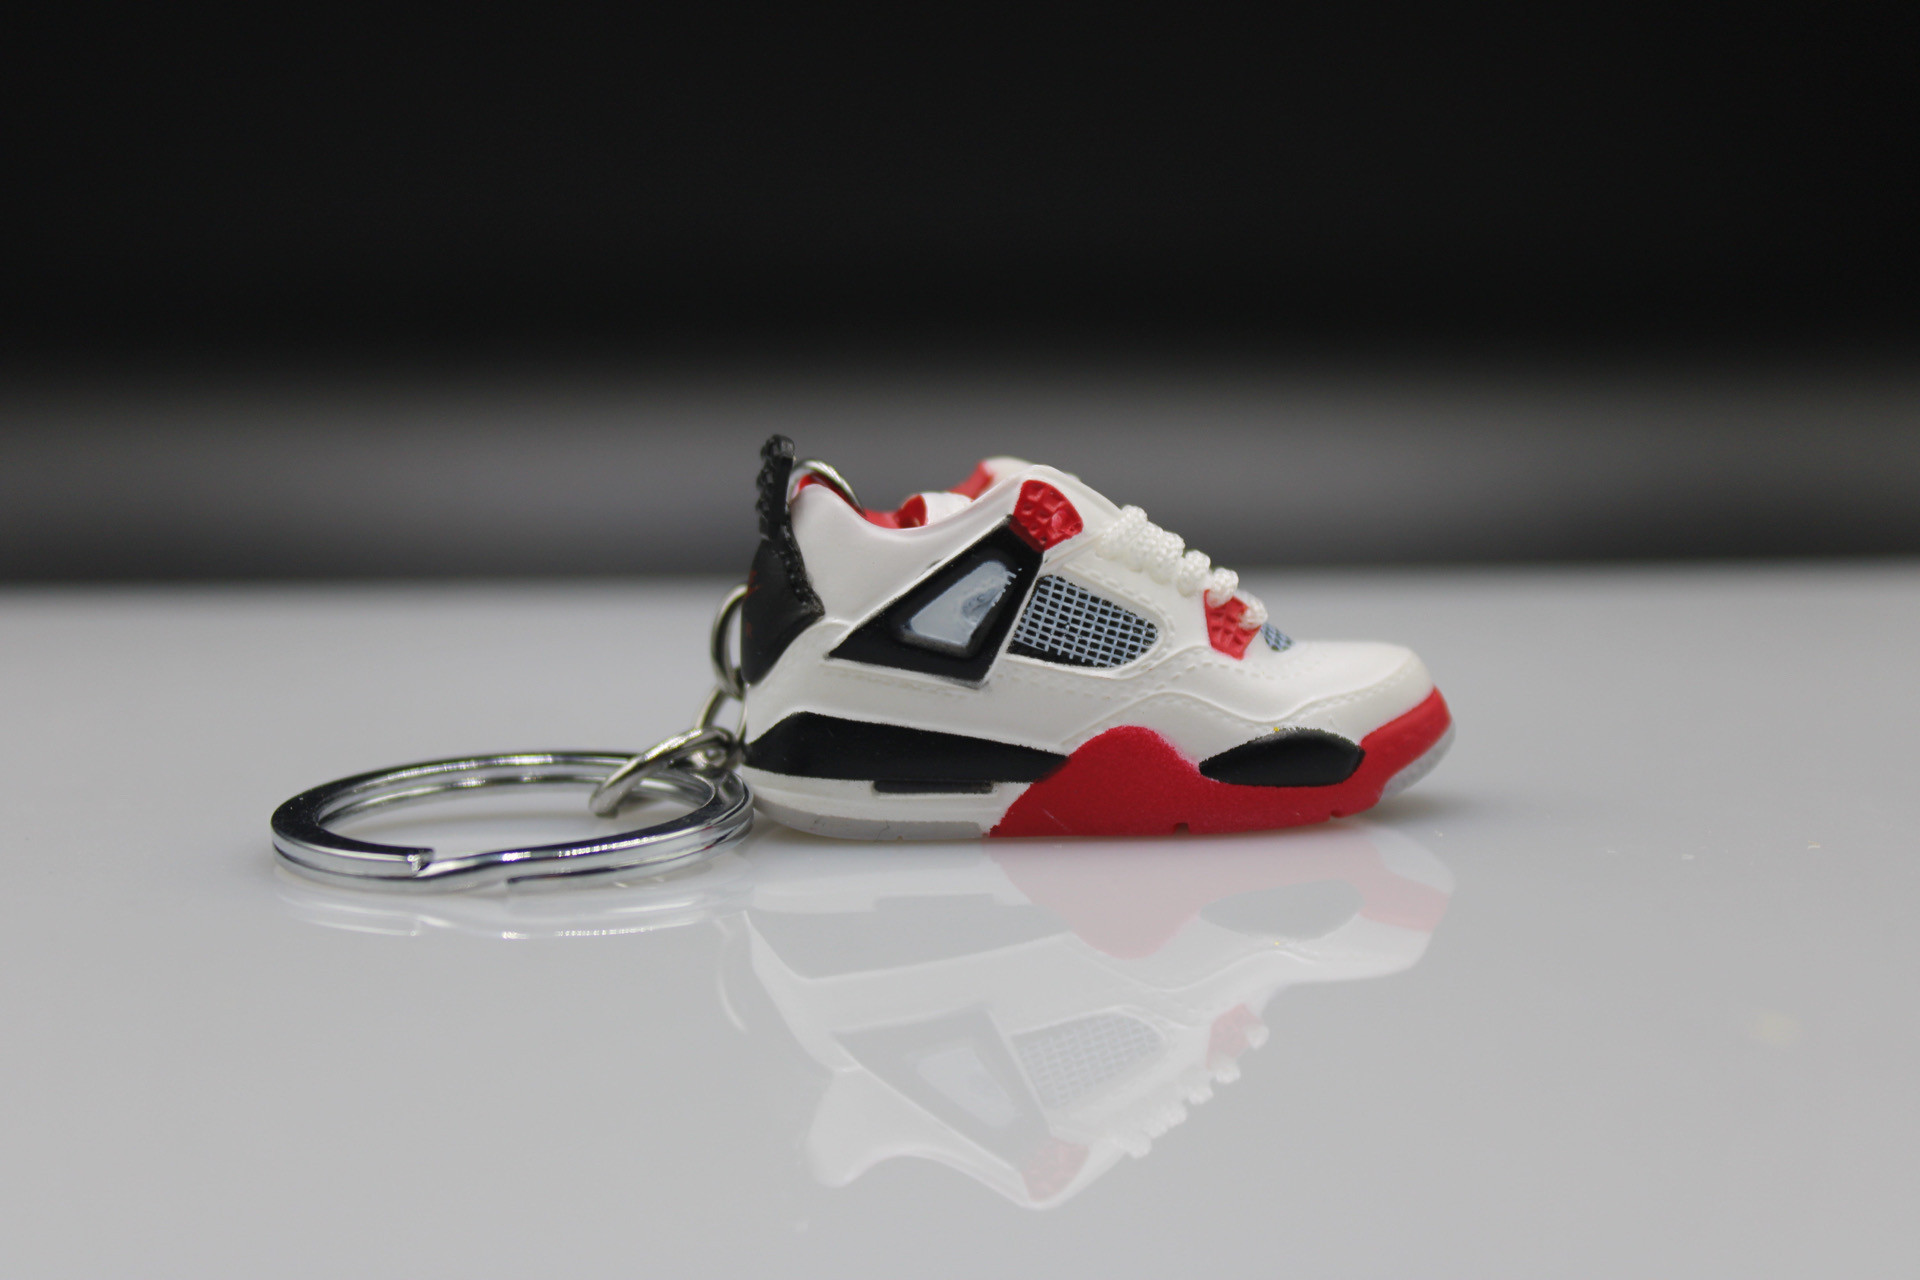 Porte-clés Sneakers 3D - Air Jordan 4 OG - Fire Red